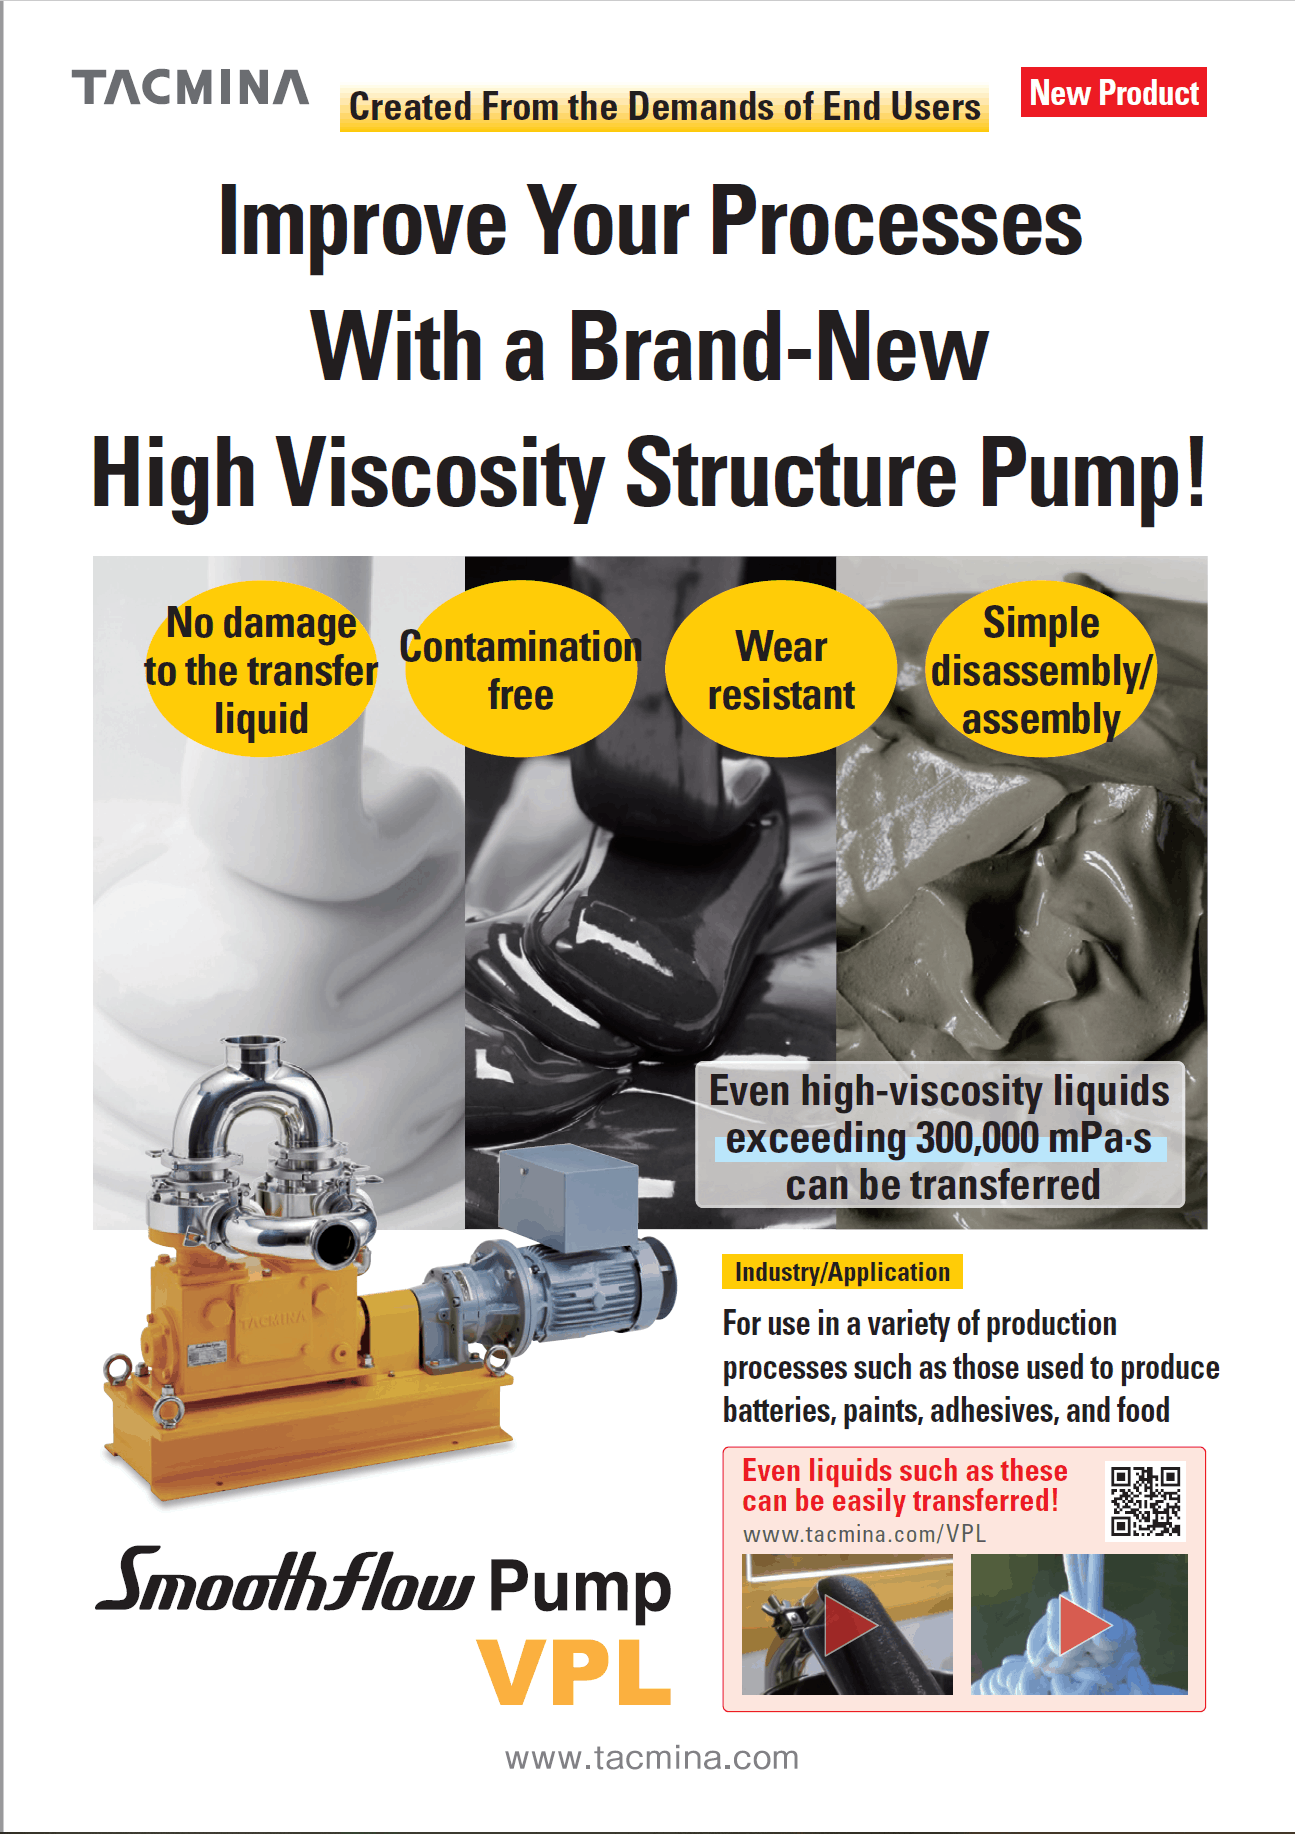 Tacmina high viscosity pump brochure VPL thumbnail image